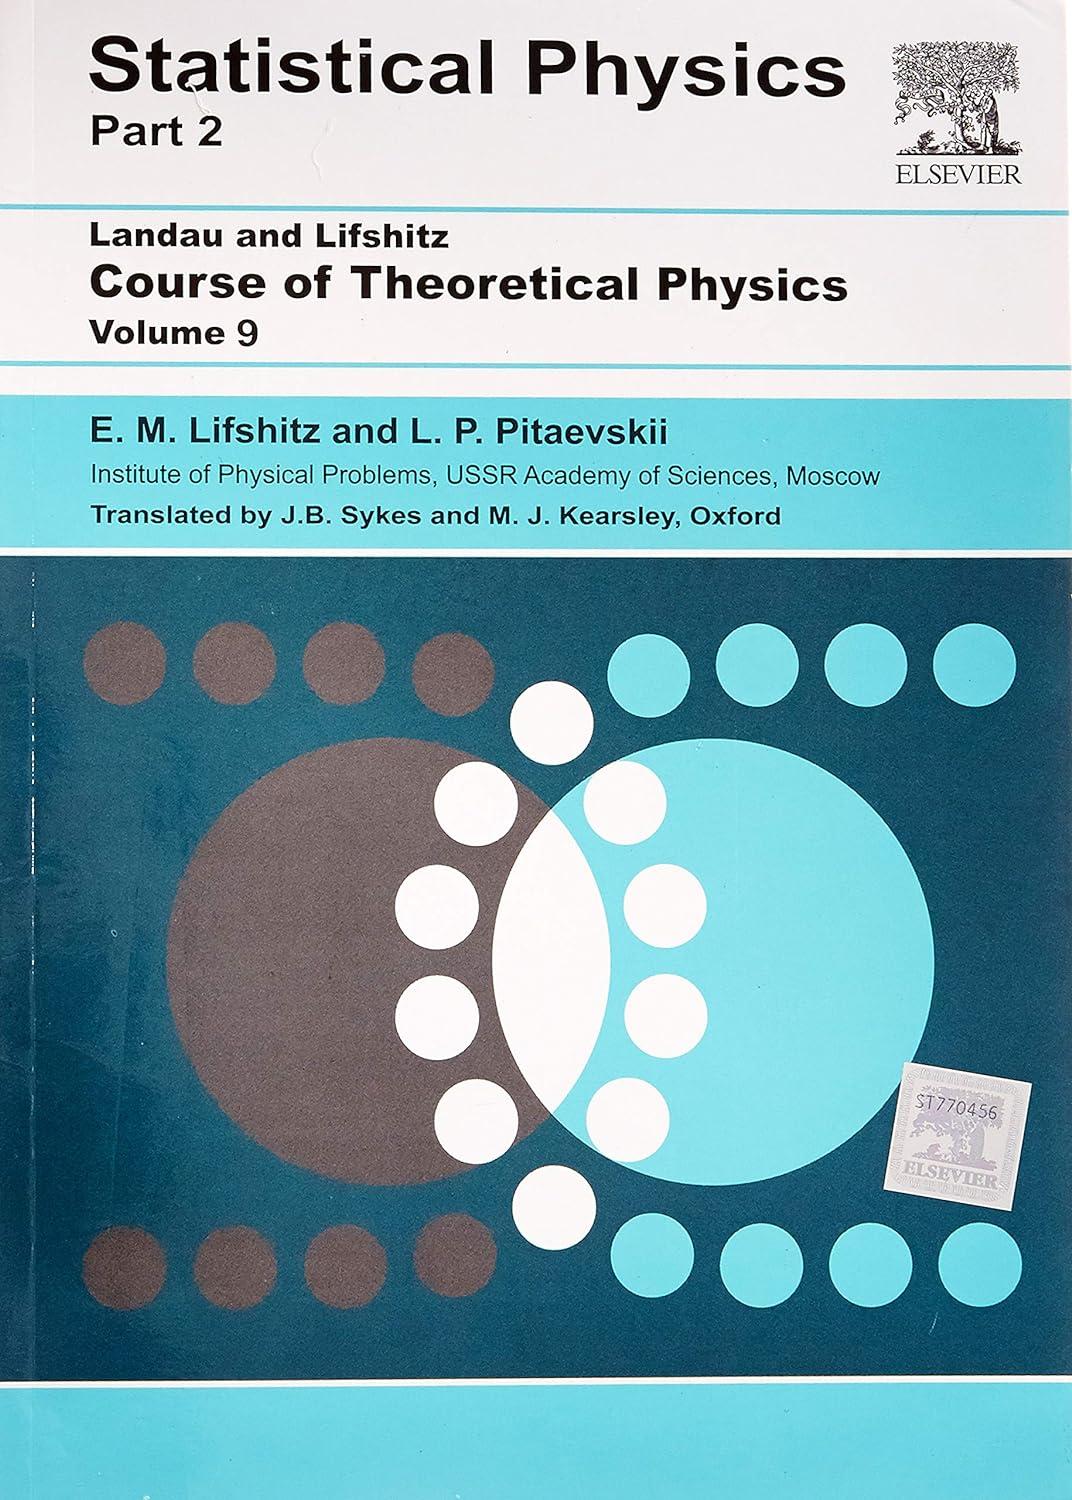 statistical physics course of theoretical physics part 2 vol. 9 1st edition landau e. m. lifshitz , l. p.